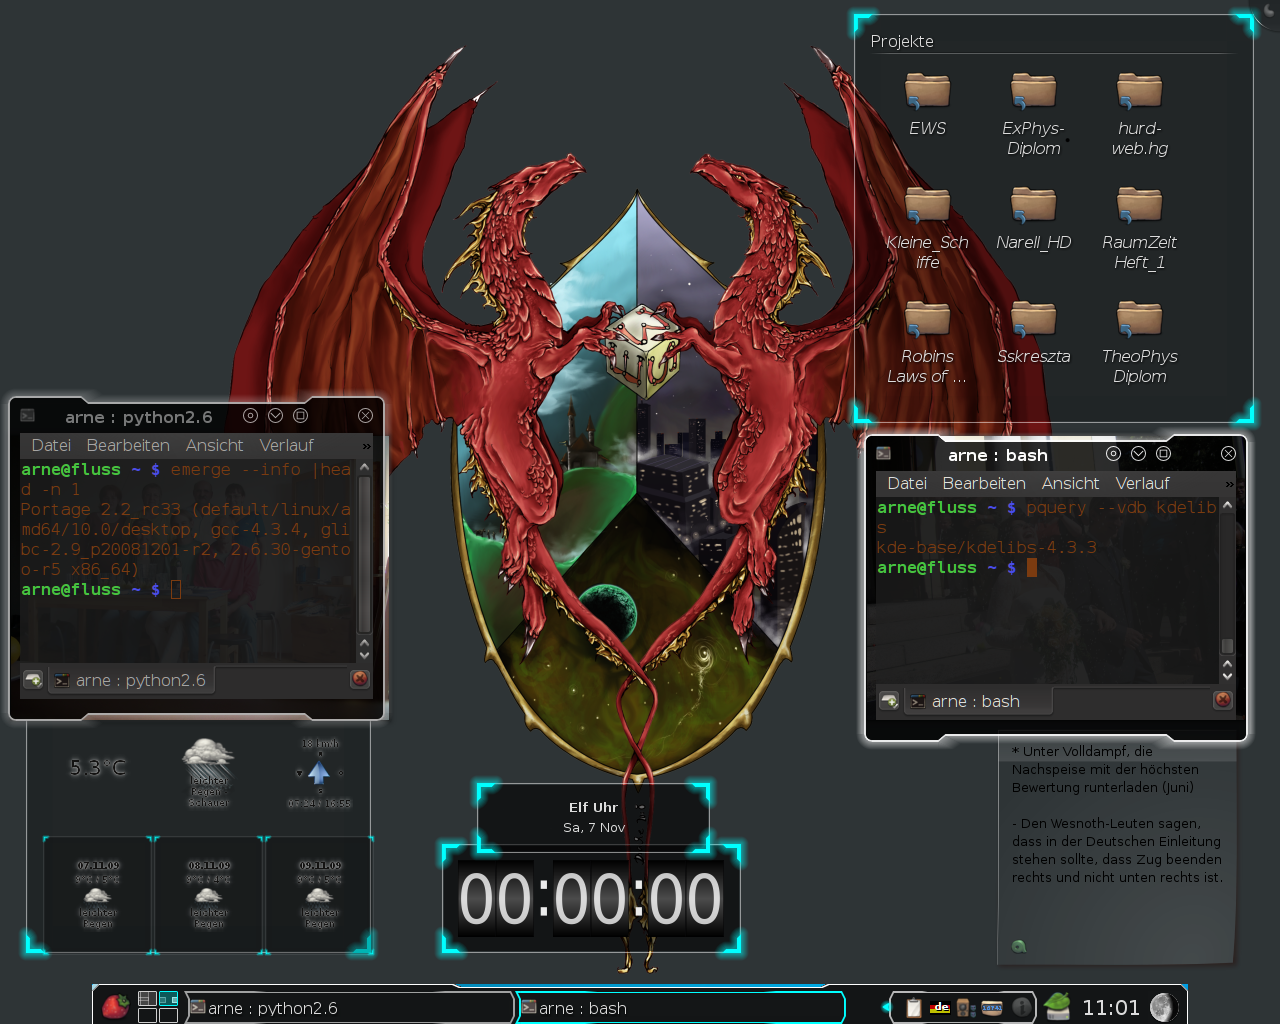 KDE 4.3.3 Screenshot